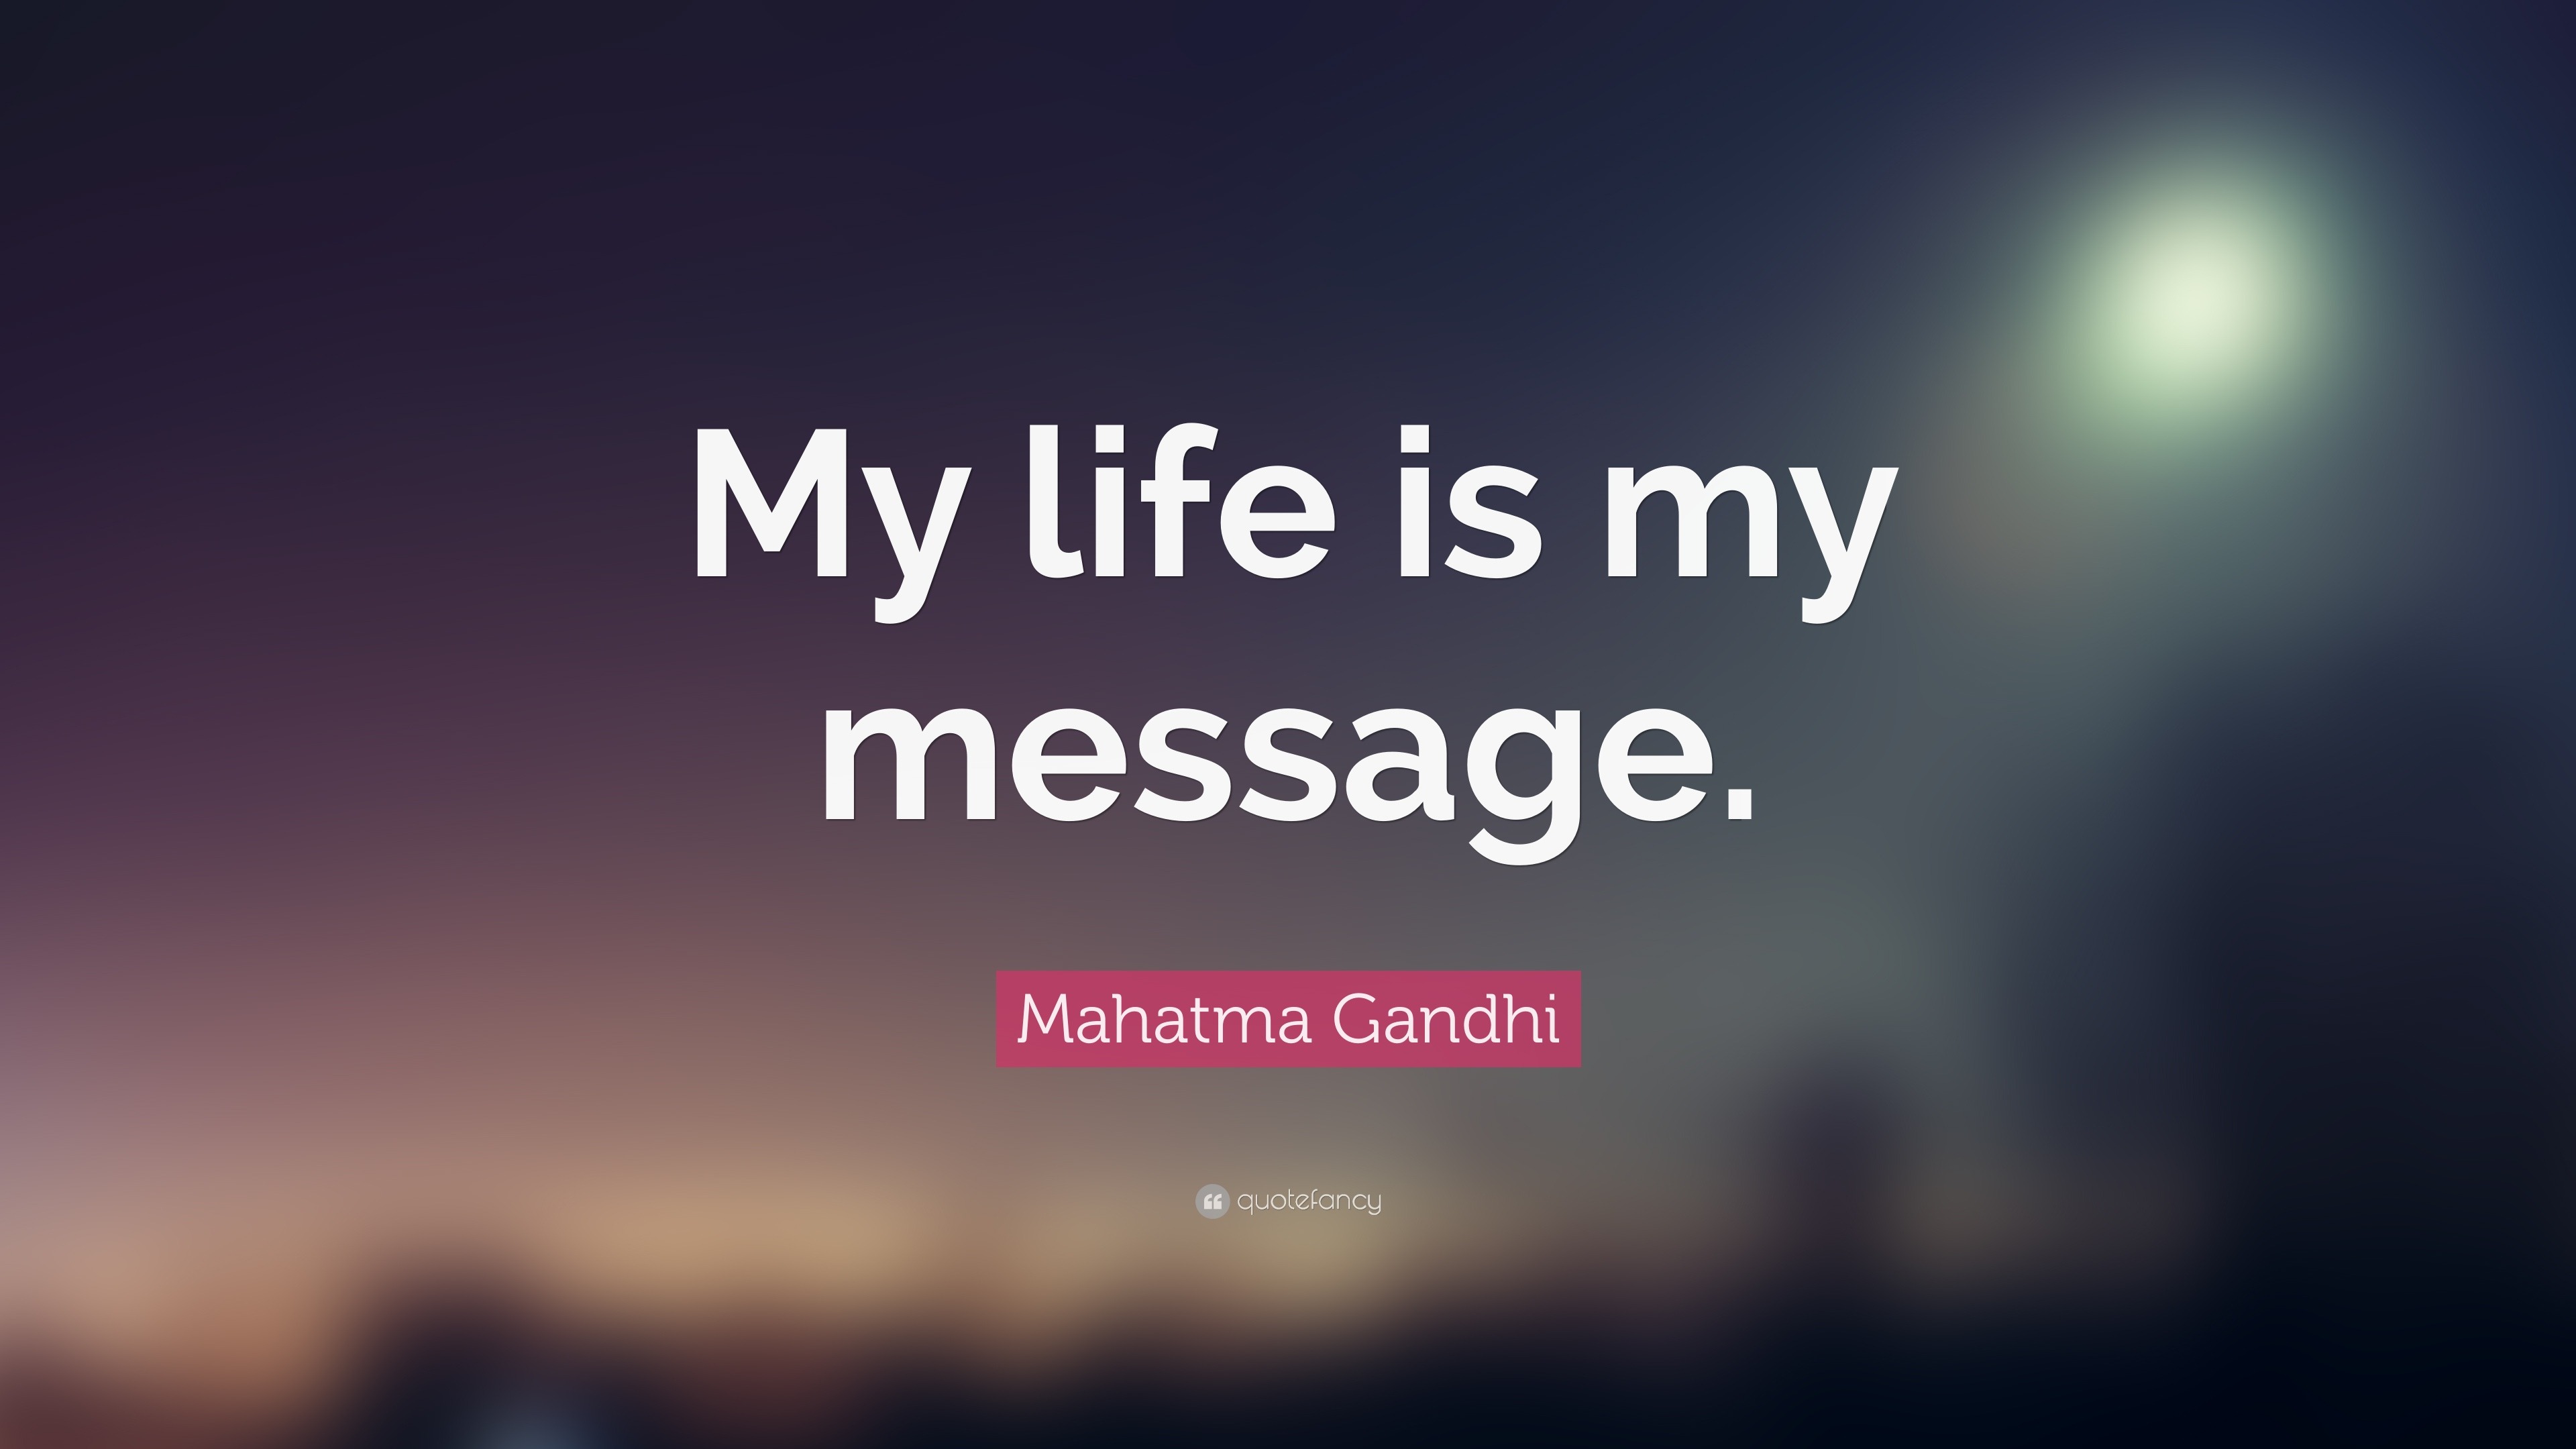 Mahatma Gandhi Quote   My  life  is my  message  20 